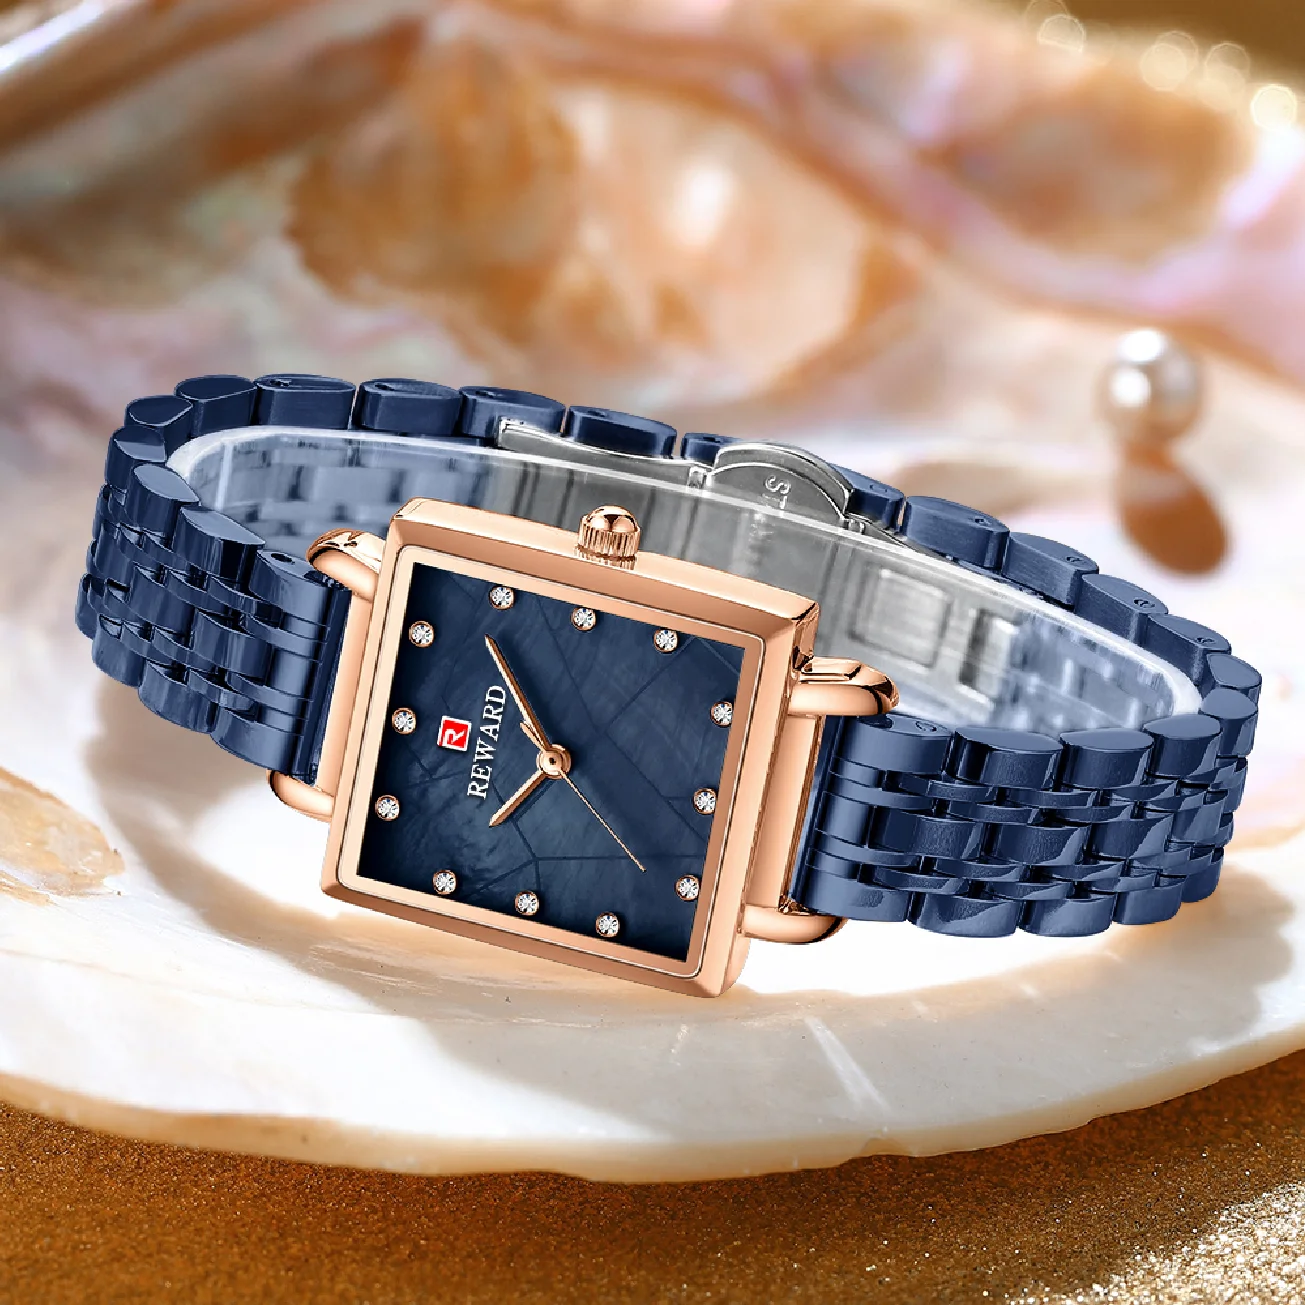 REWARD Women's Watches Fashion Square Quartz Watch Waterproof Ladies Simple Rose Gold Steel Luxury Women Wrist Watch With Box enlarge